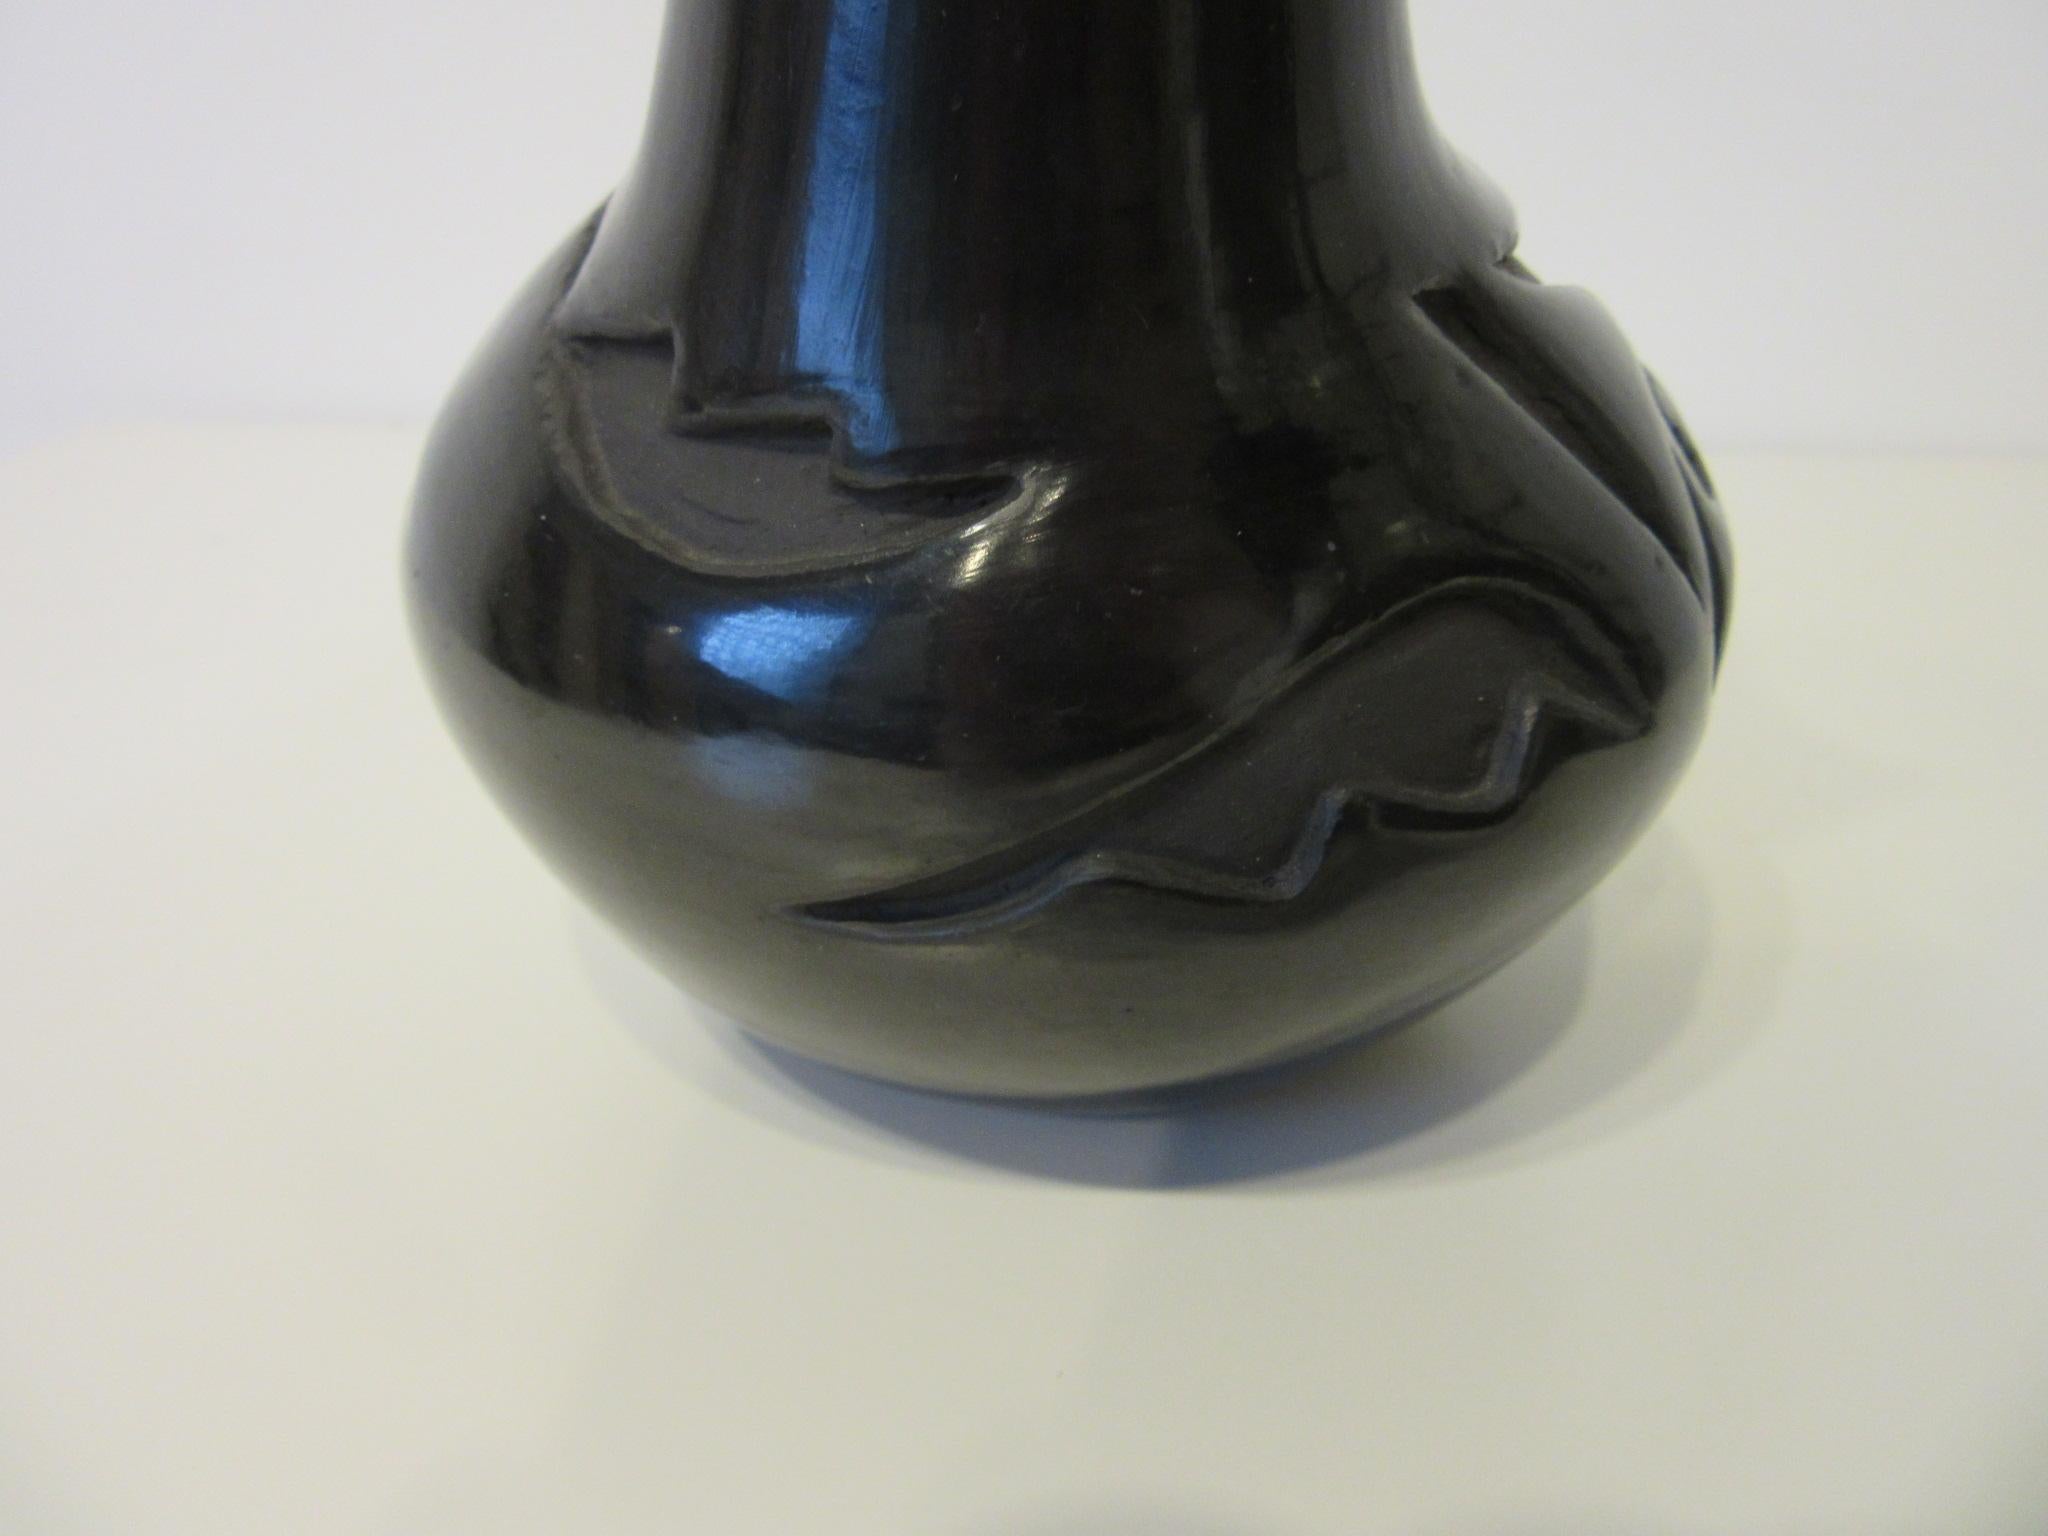 Native American Pueblo American Indian Pottery Vase by Glenda Naranjo For Sale